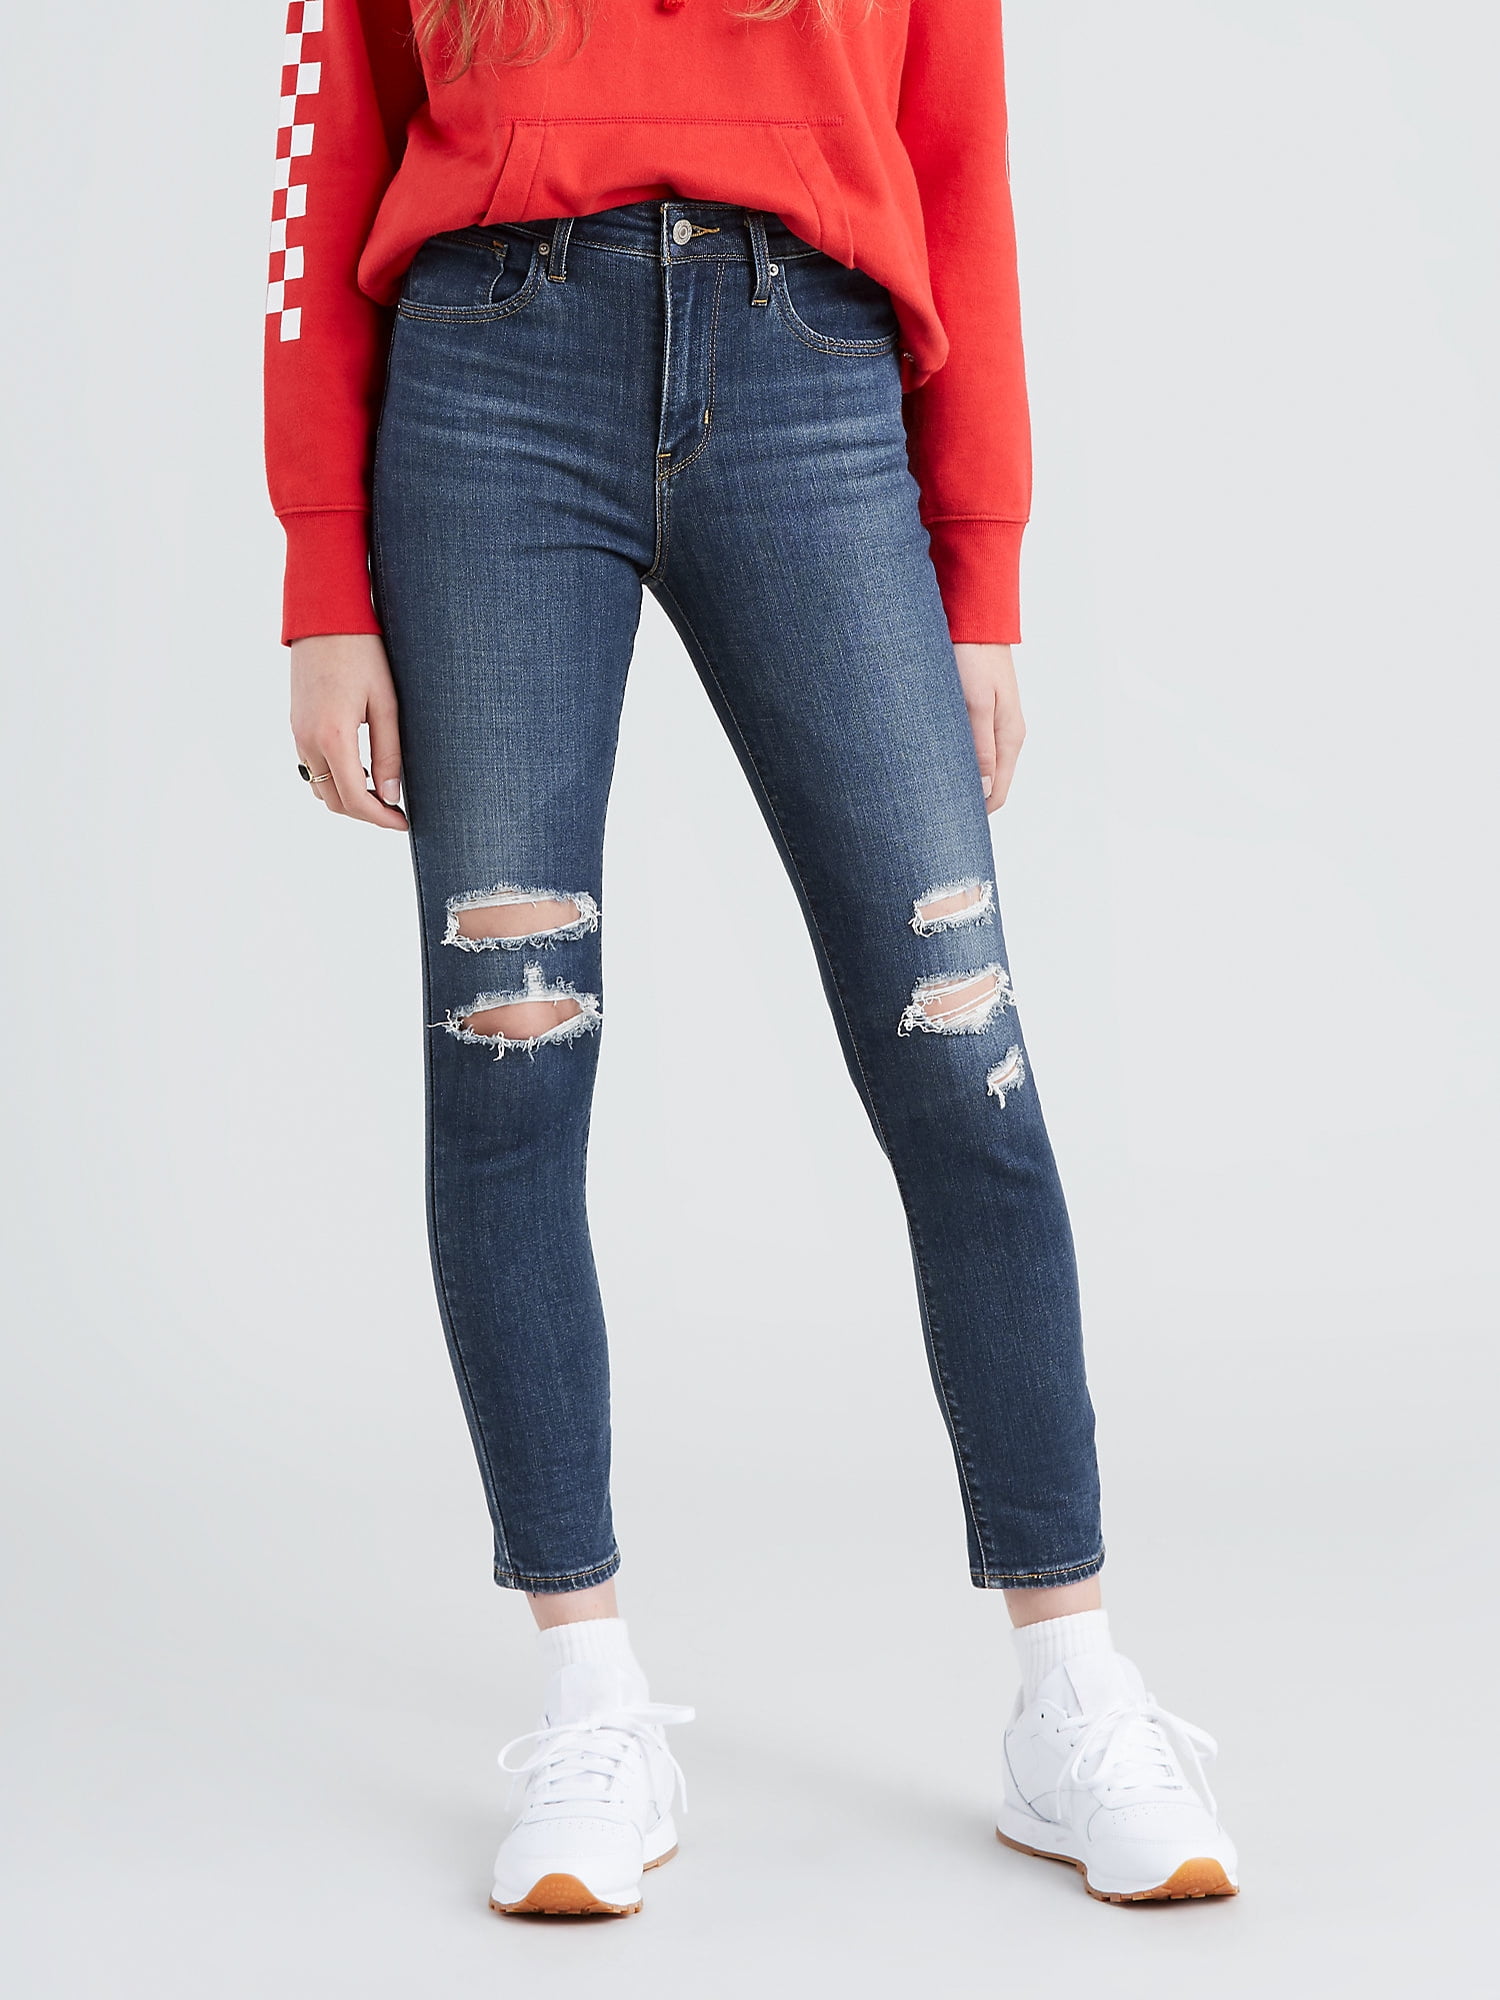 Levi's Original Women's High Rise Skinny Jeans - Walmart.com